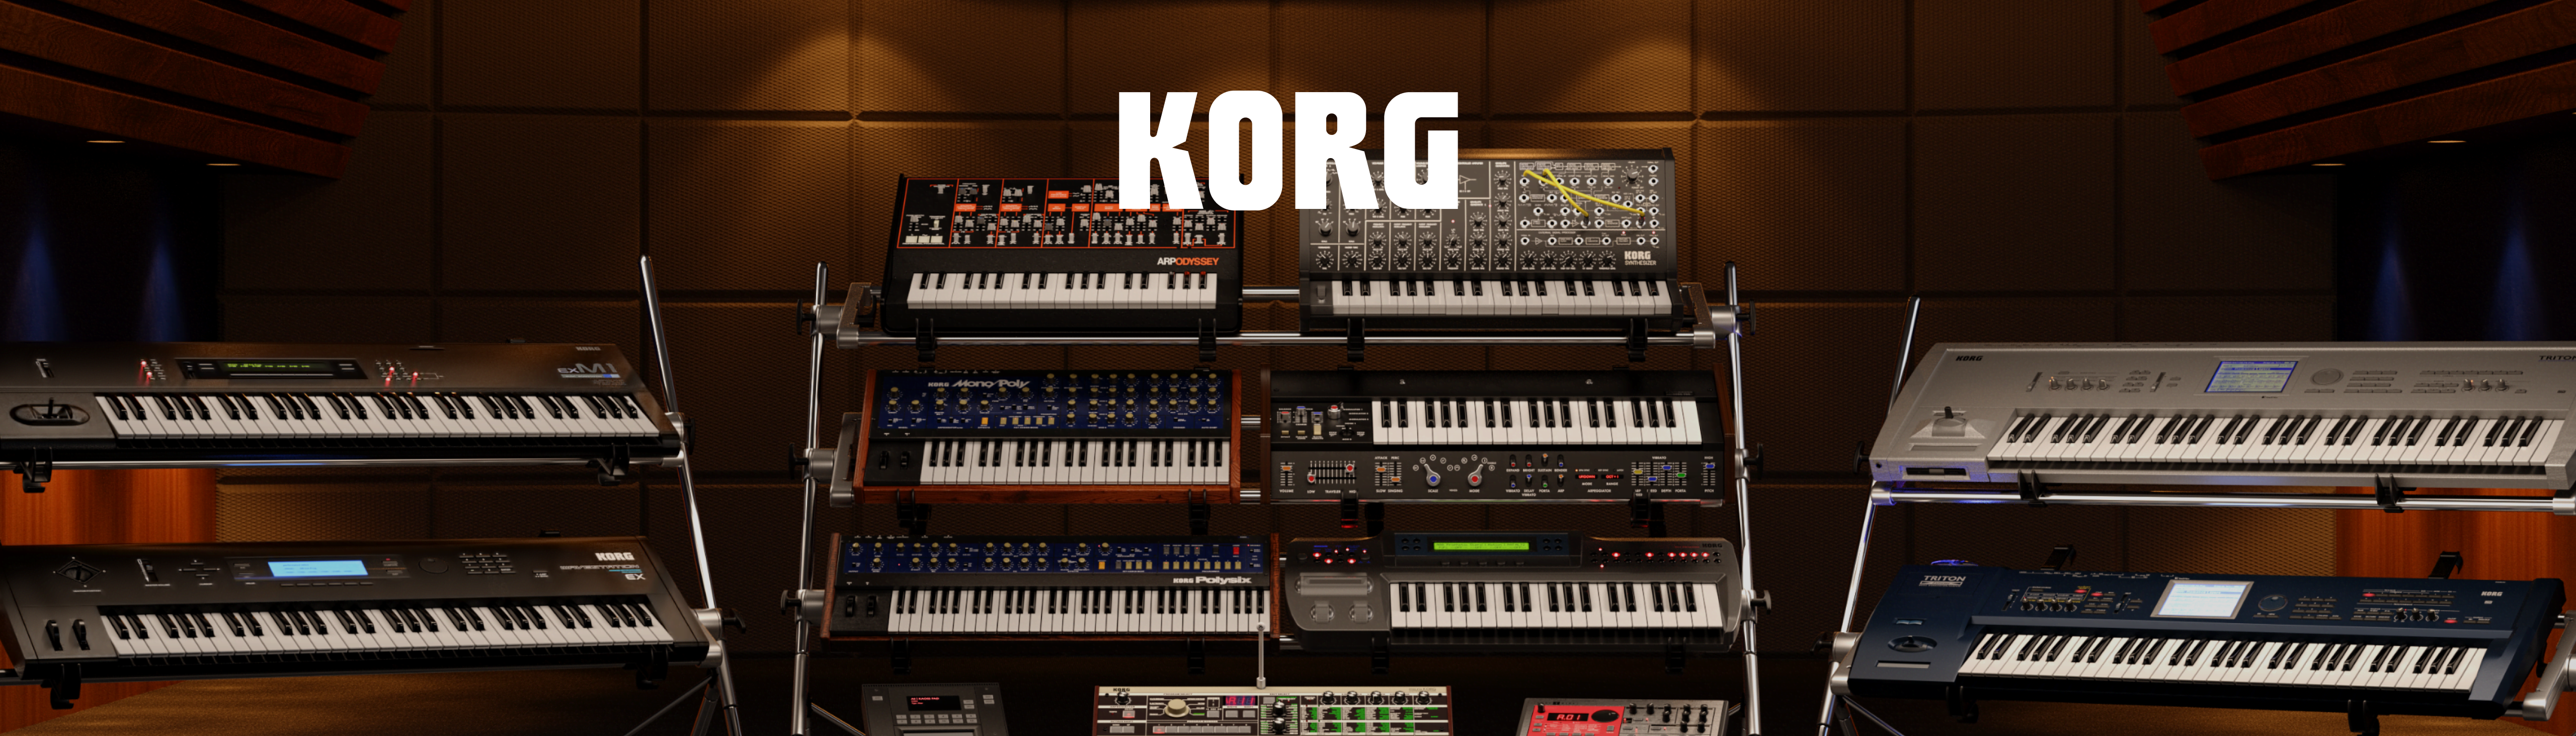 KORG Collection 4 header